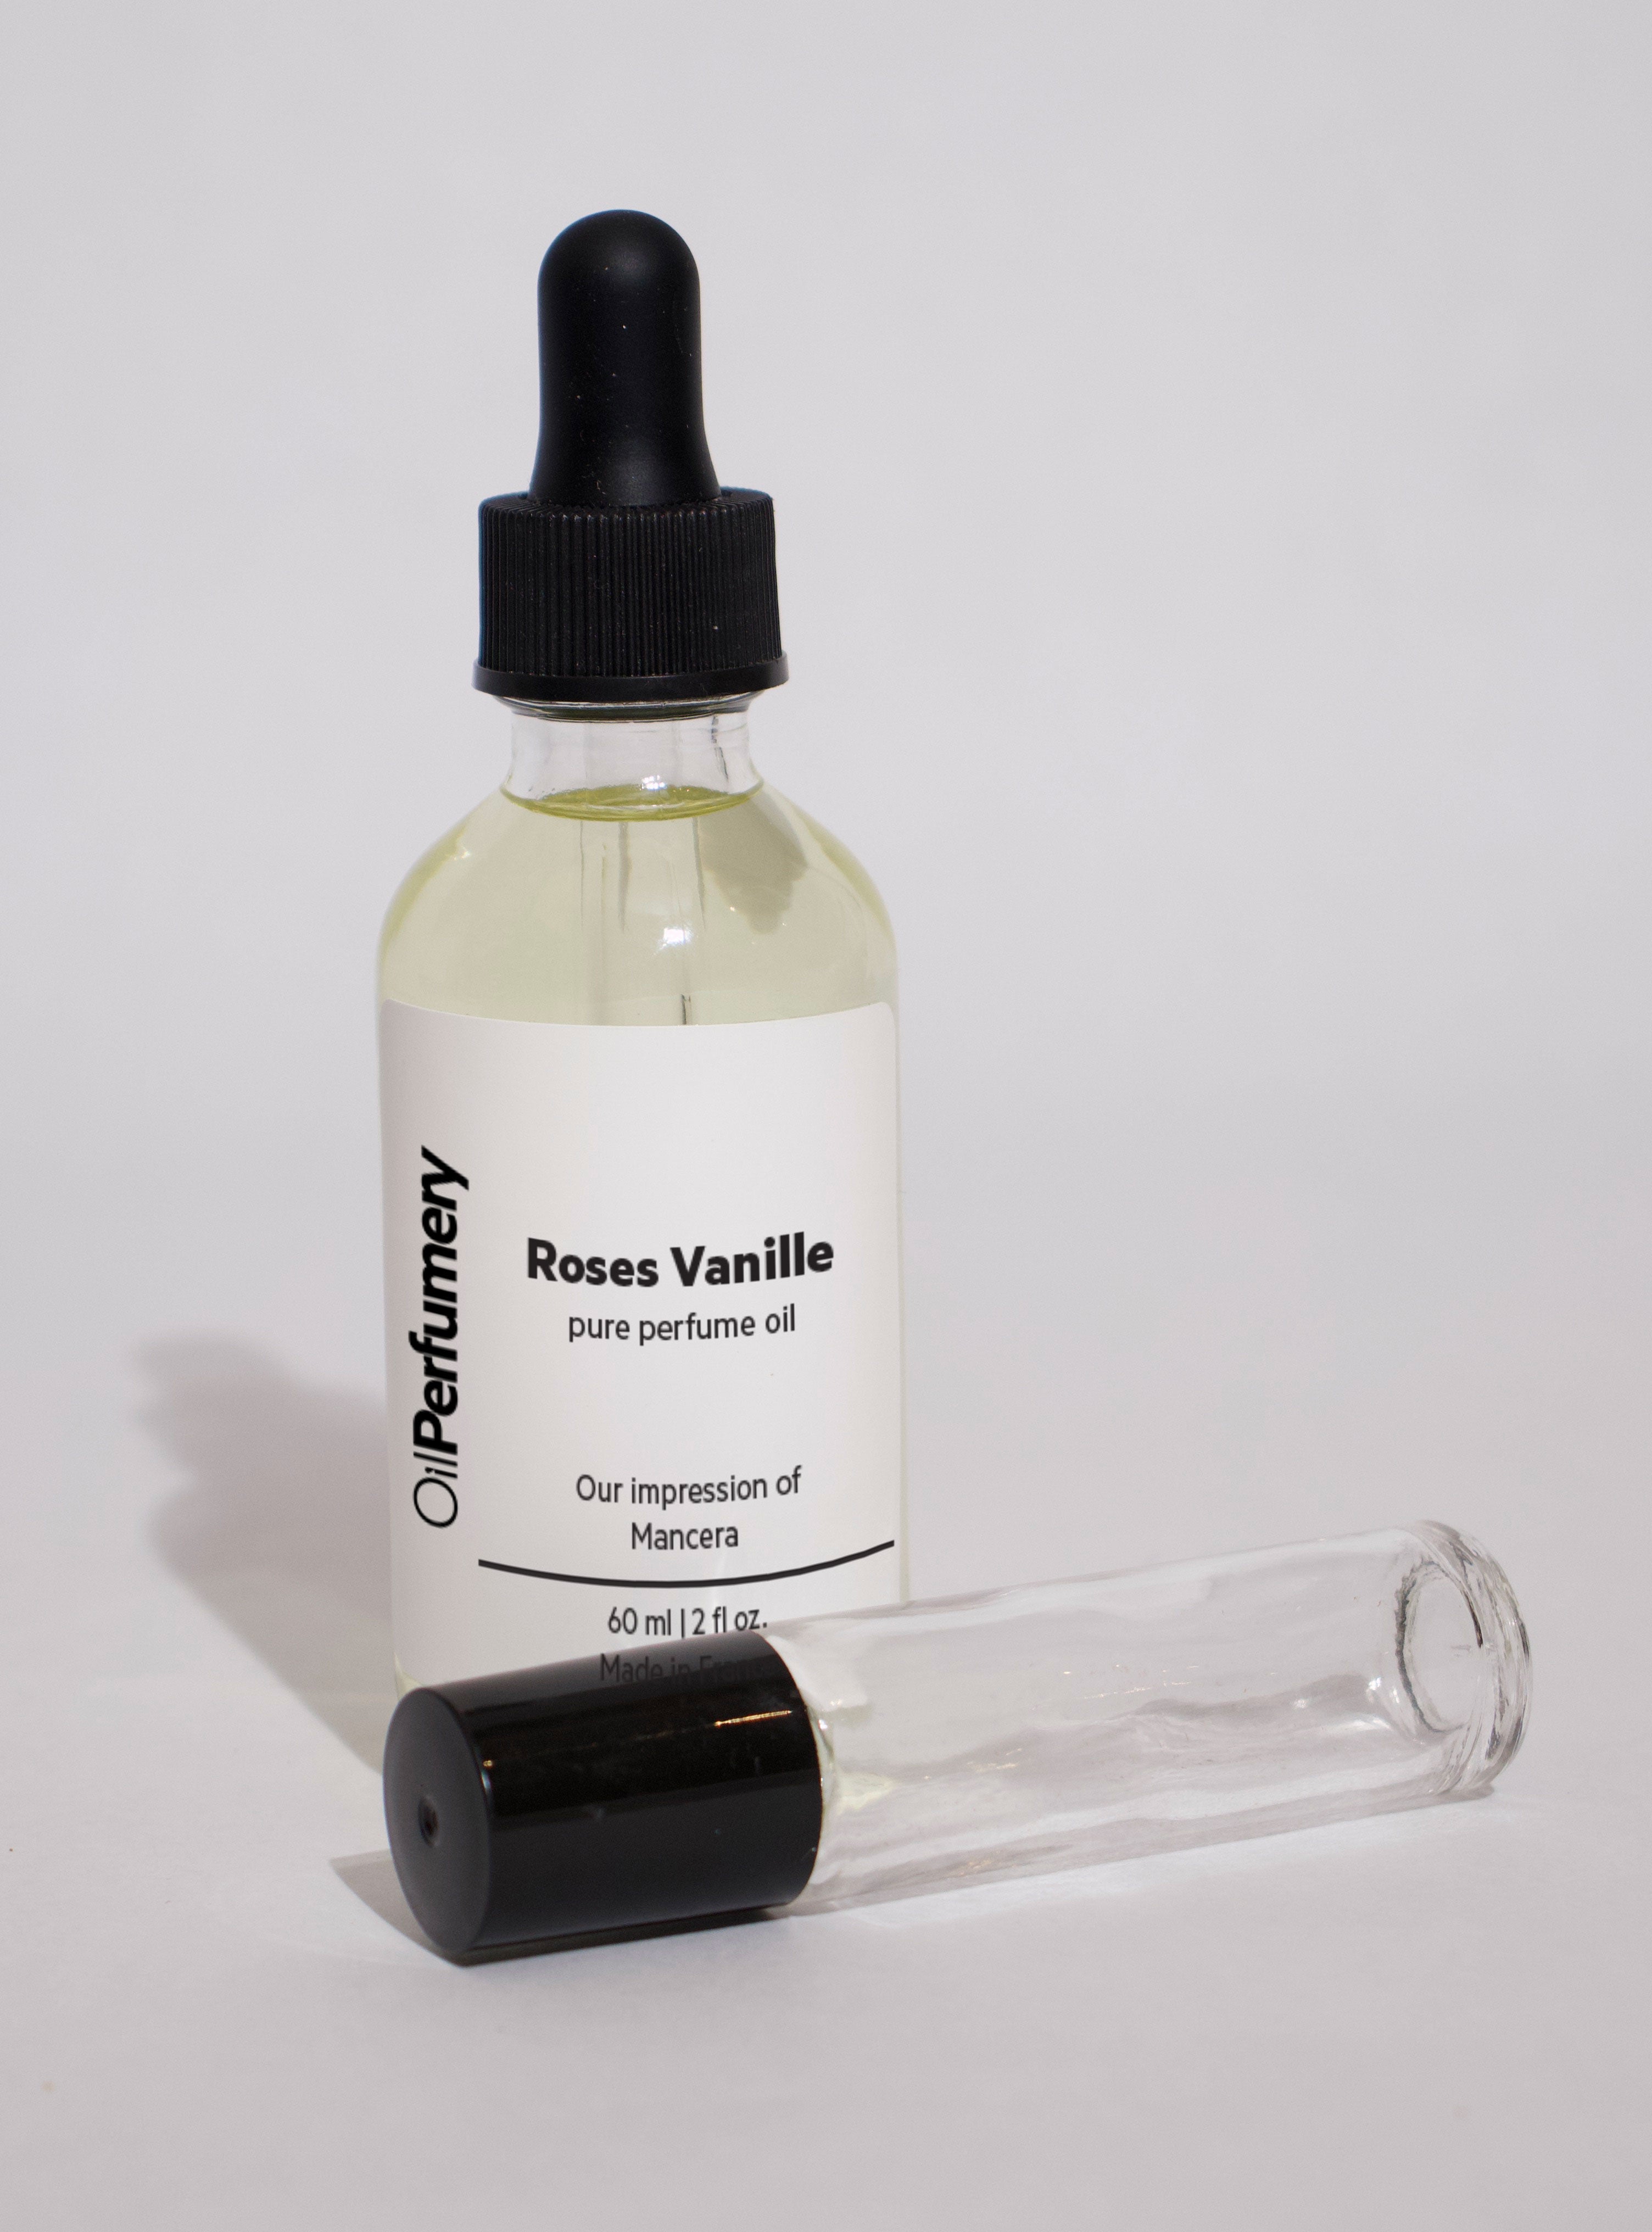 Oil Perfumery Impression of Mancera - Roses Vanille